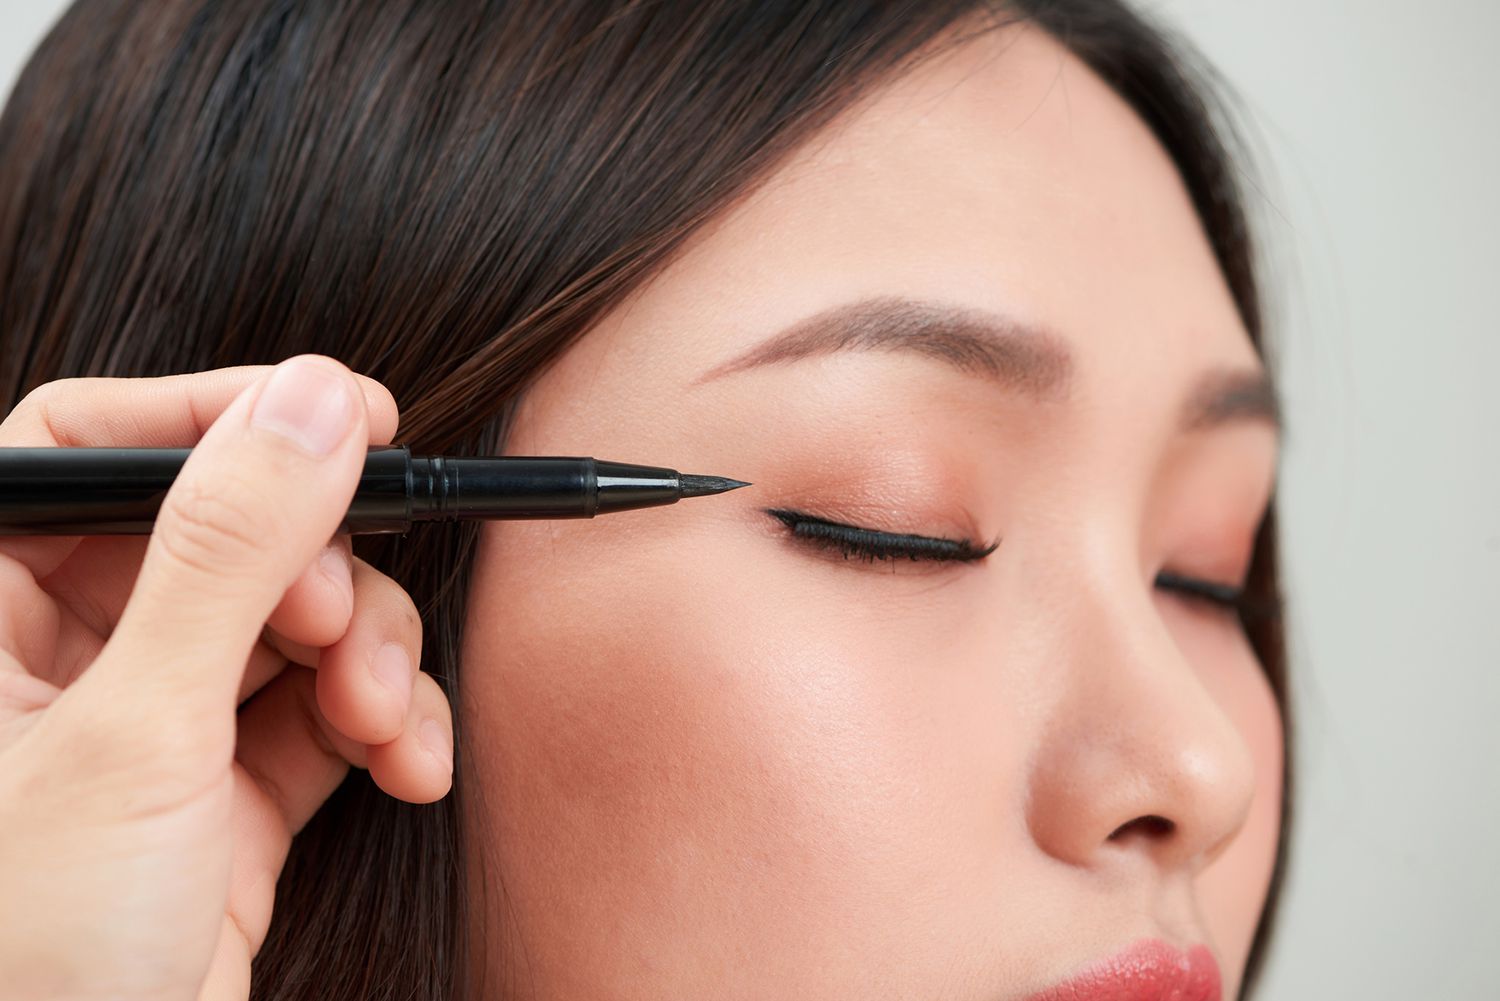 black liquid eyeliner being applied on woman